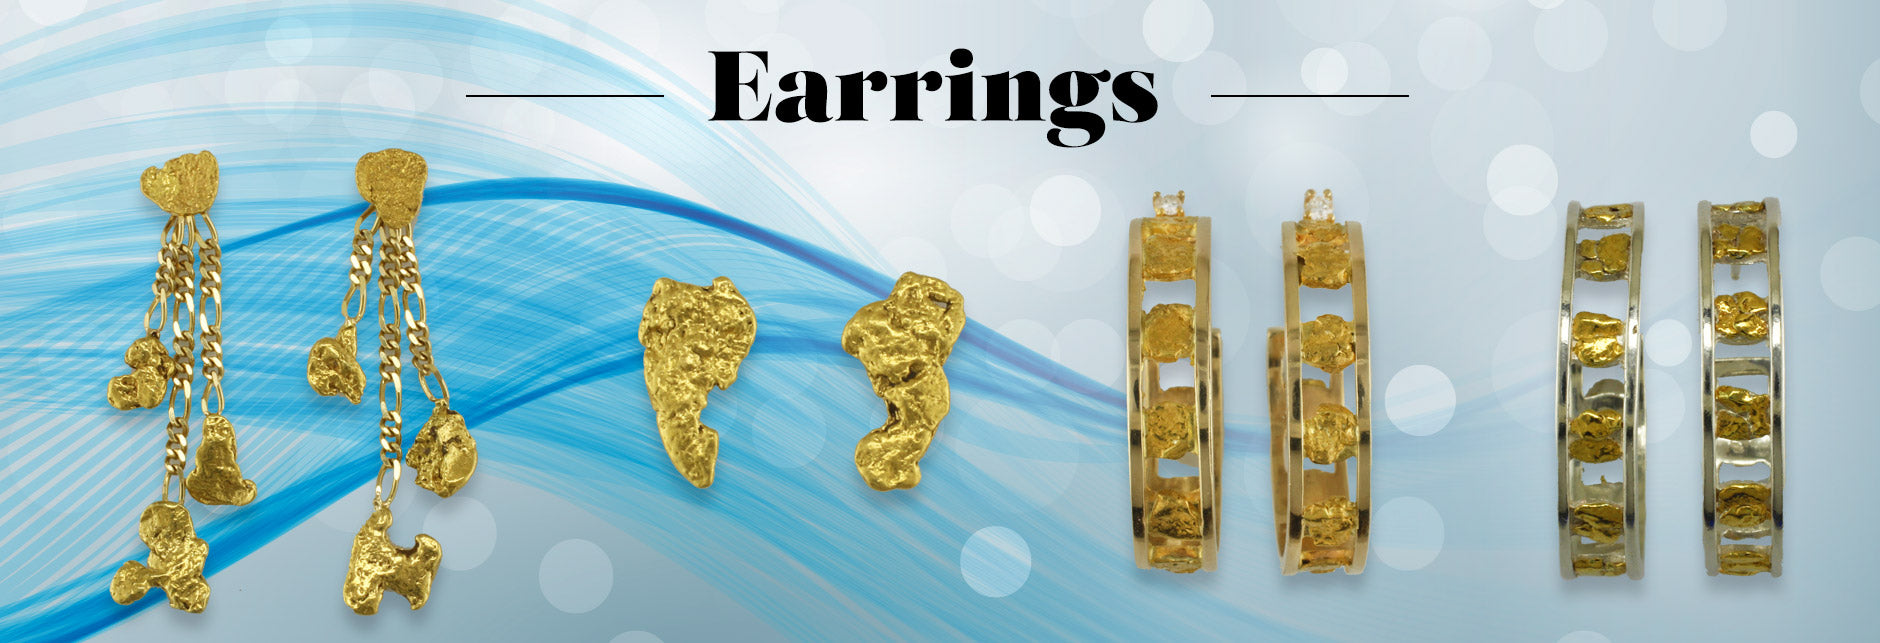 Earrings Gold Nugget Precious Metal